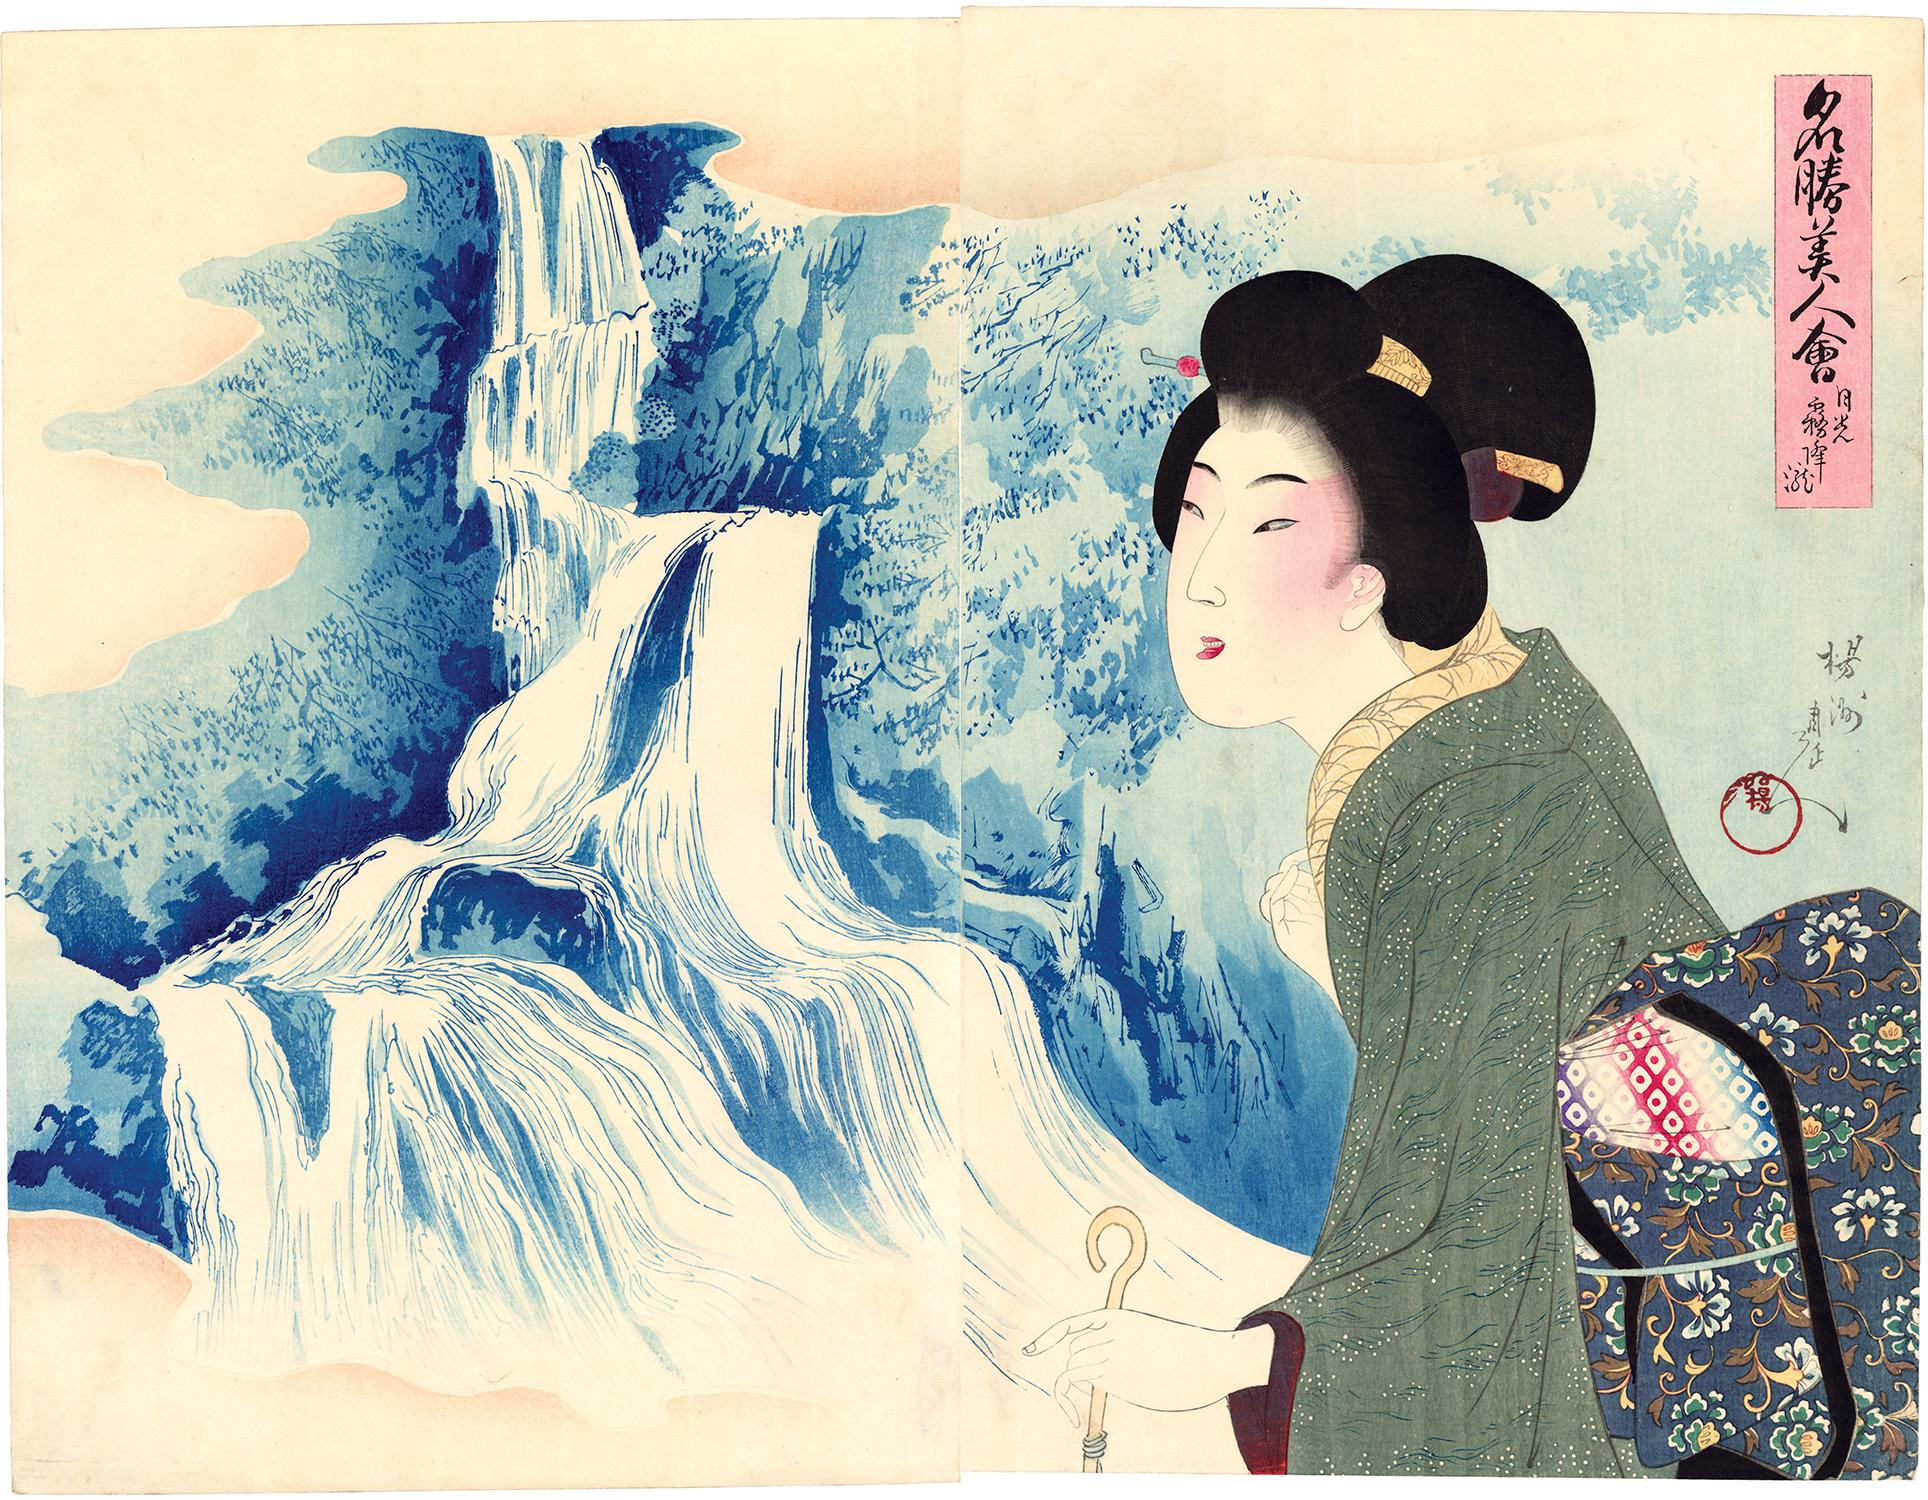 Japanische japanische Schönheit, die an Kirifuri-Wasserfall erinnert